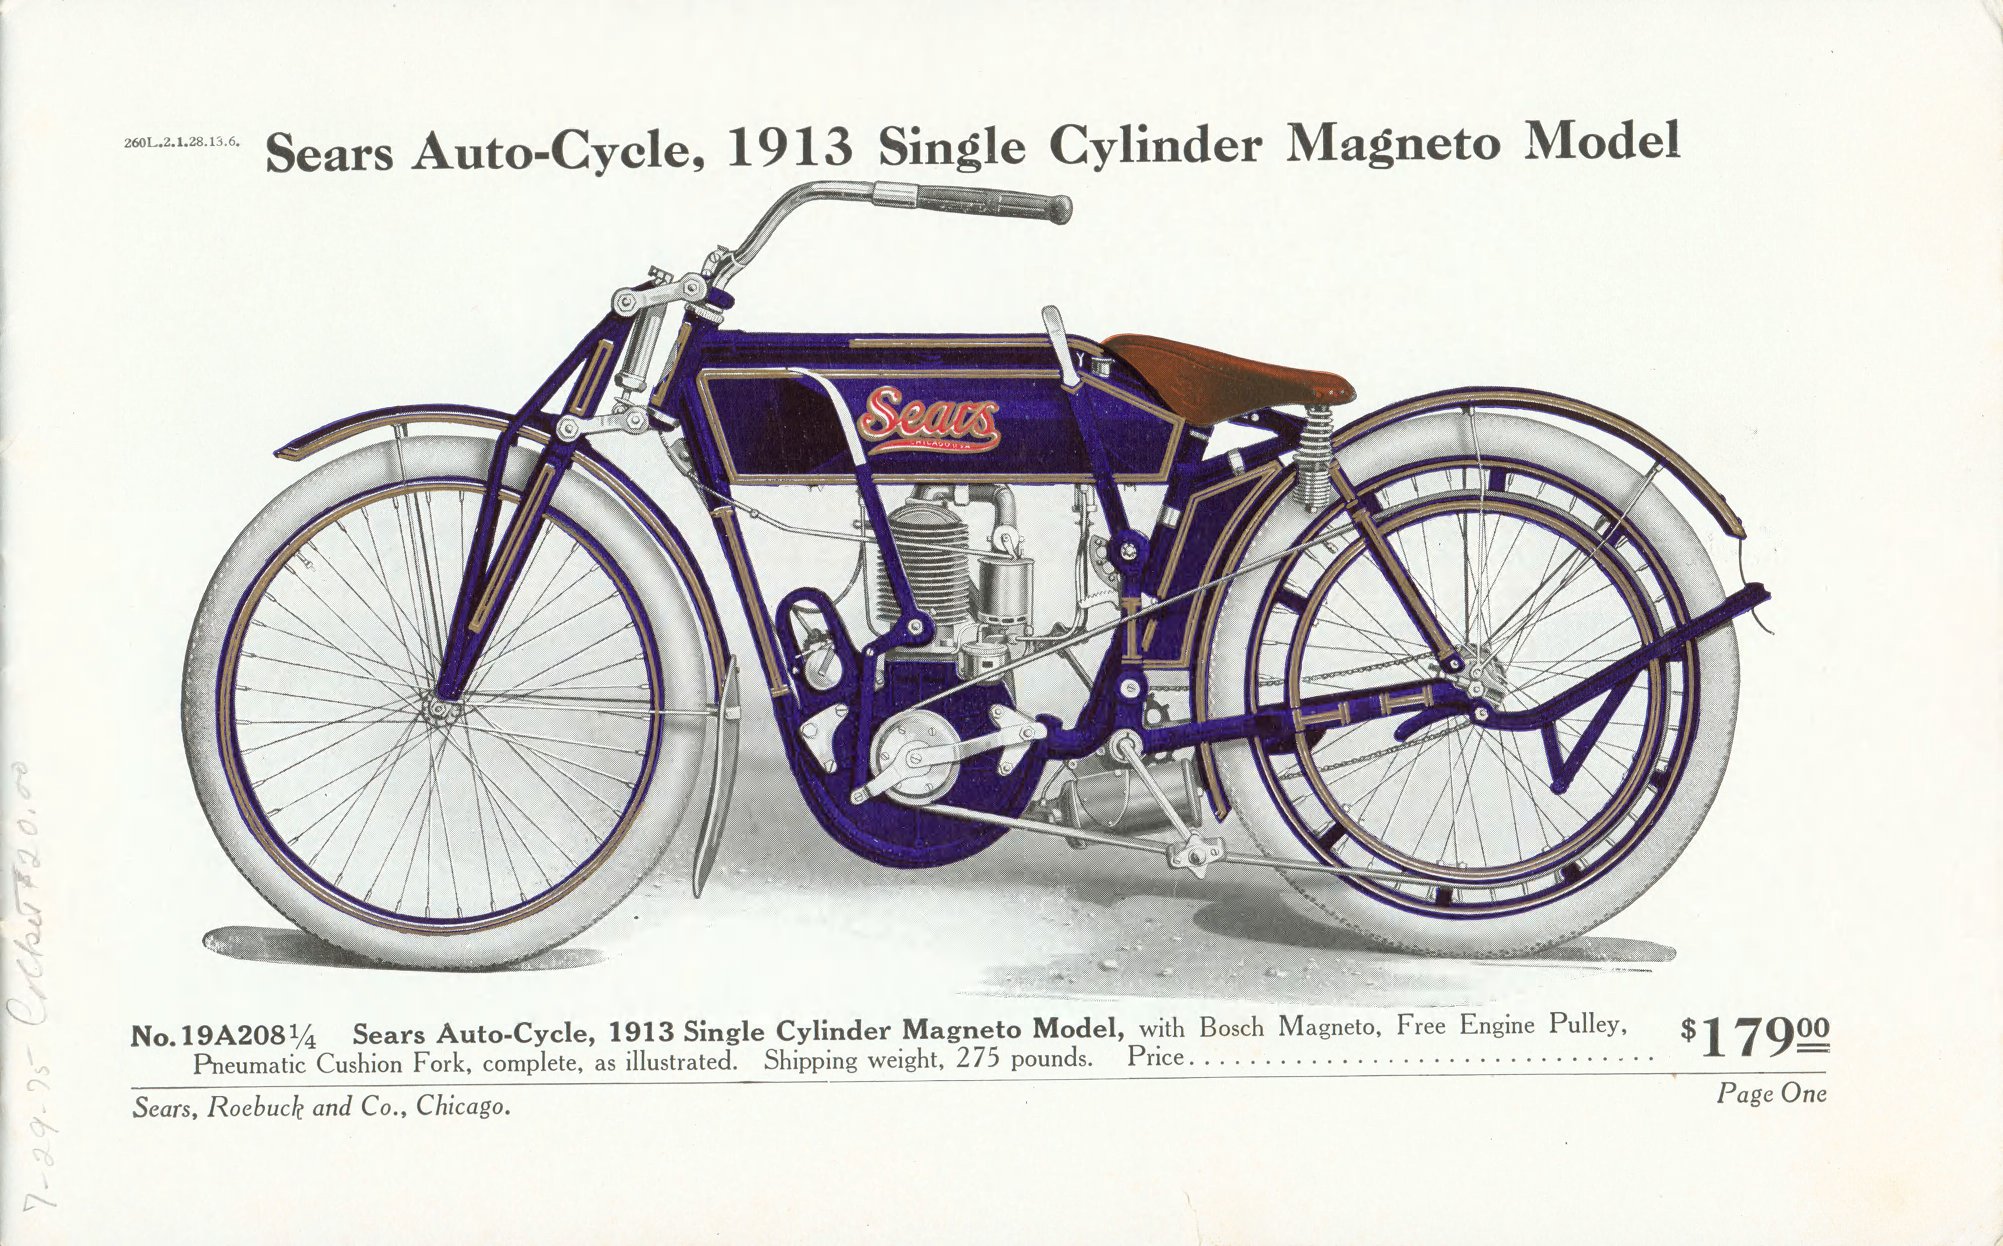 19a208 Sears Auto-Cycle 